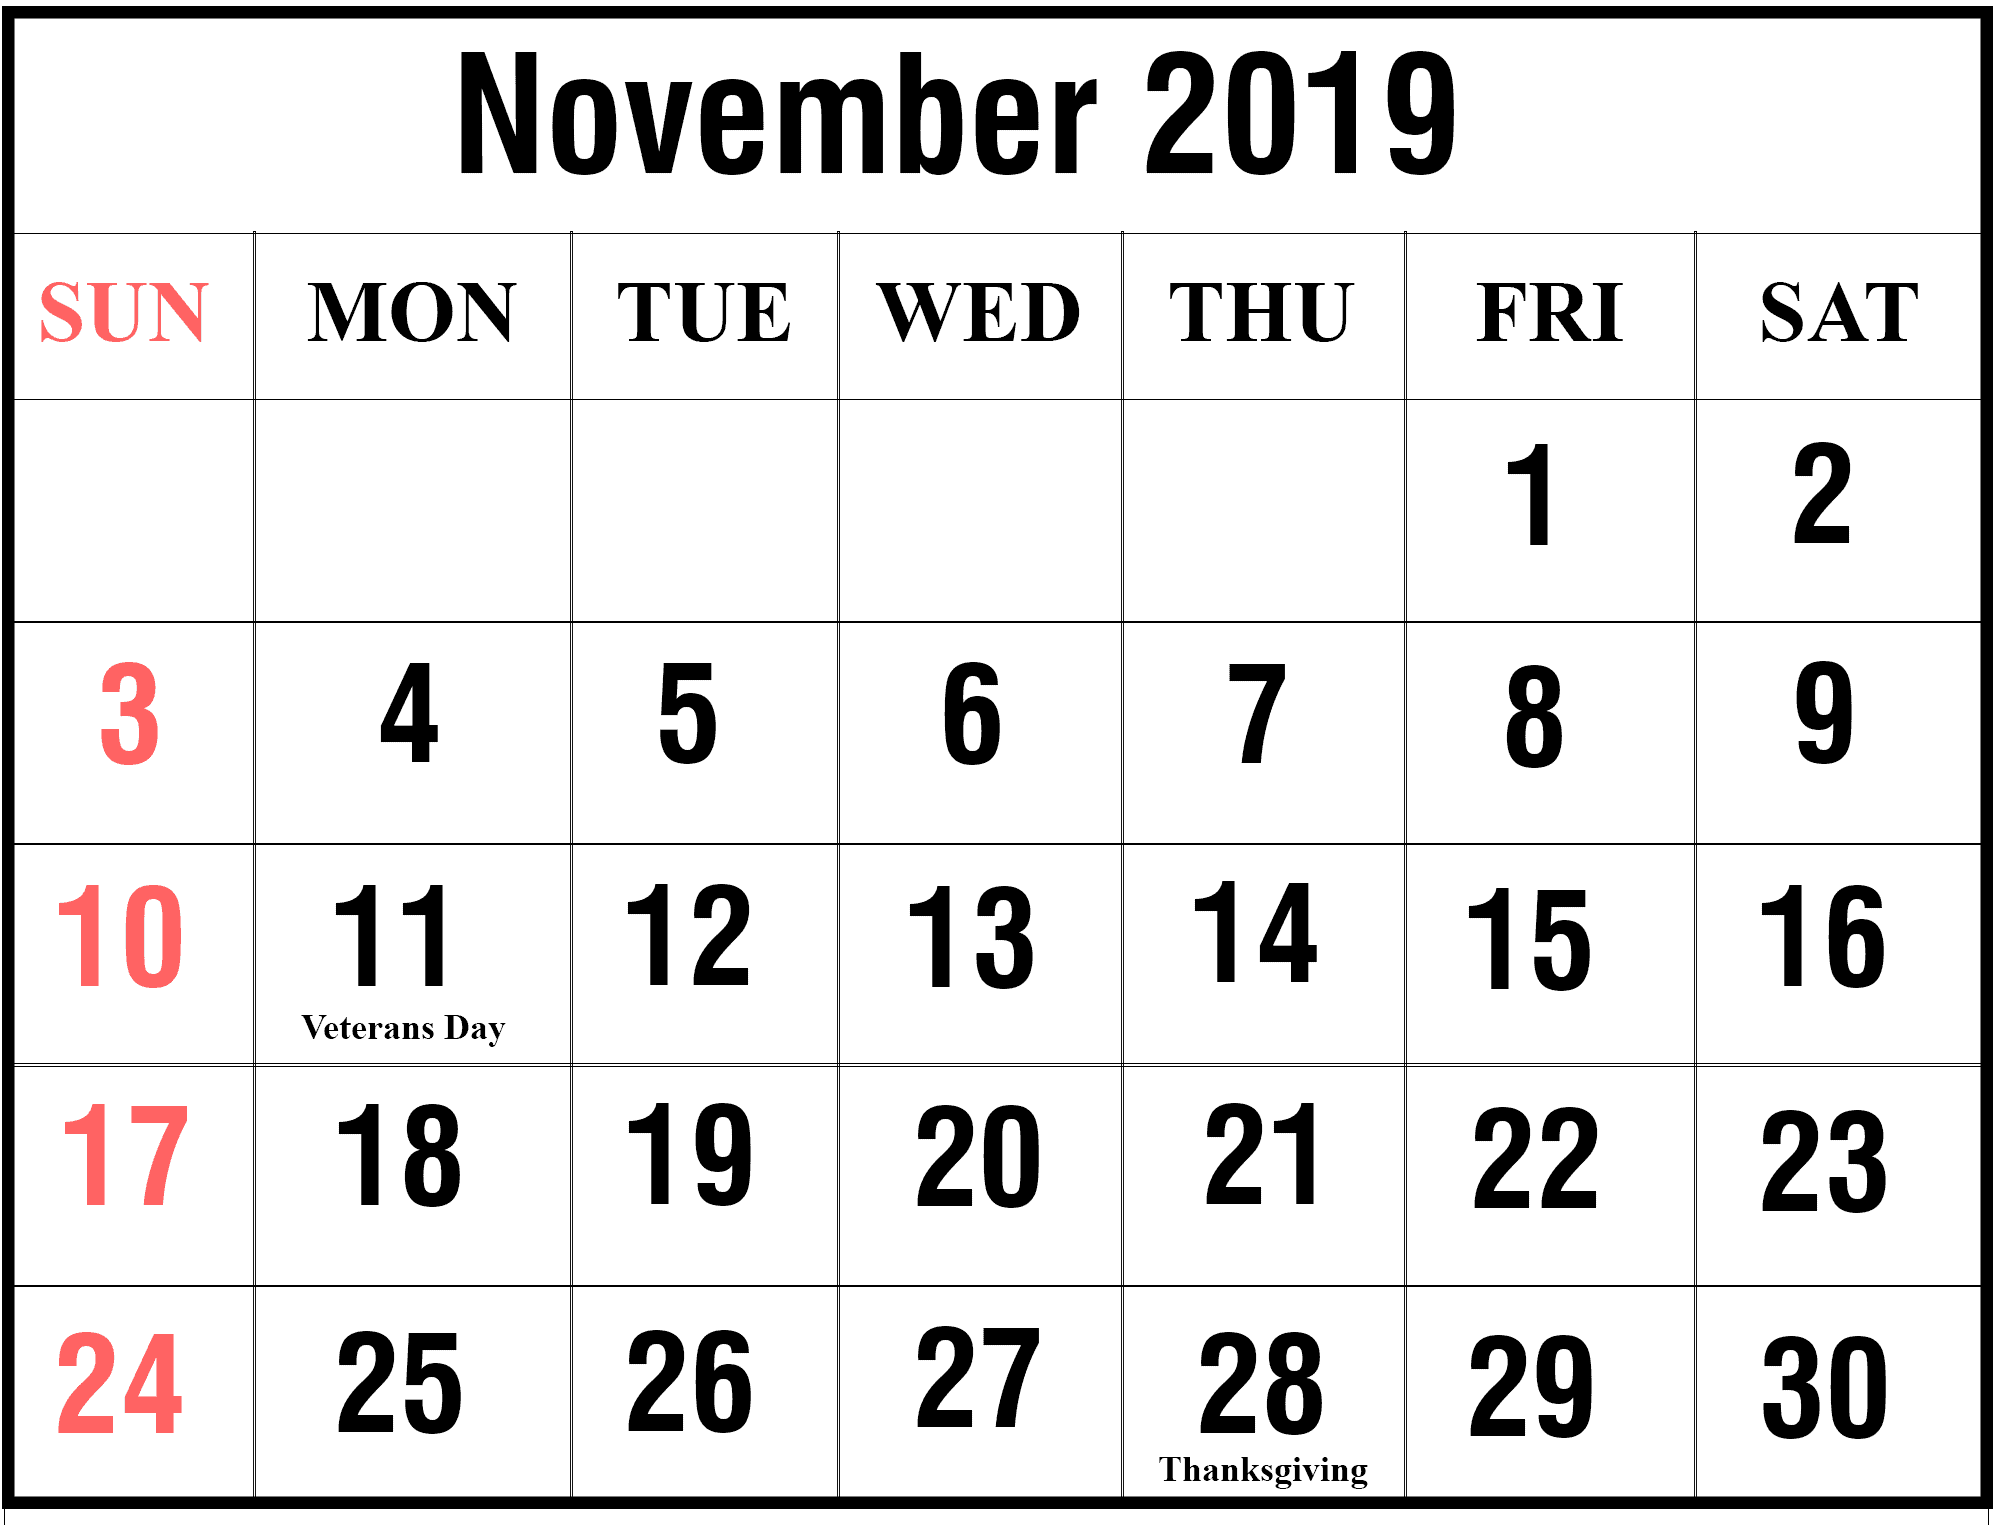 Calendar templates for November